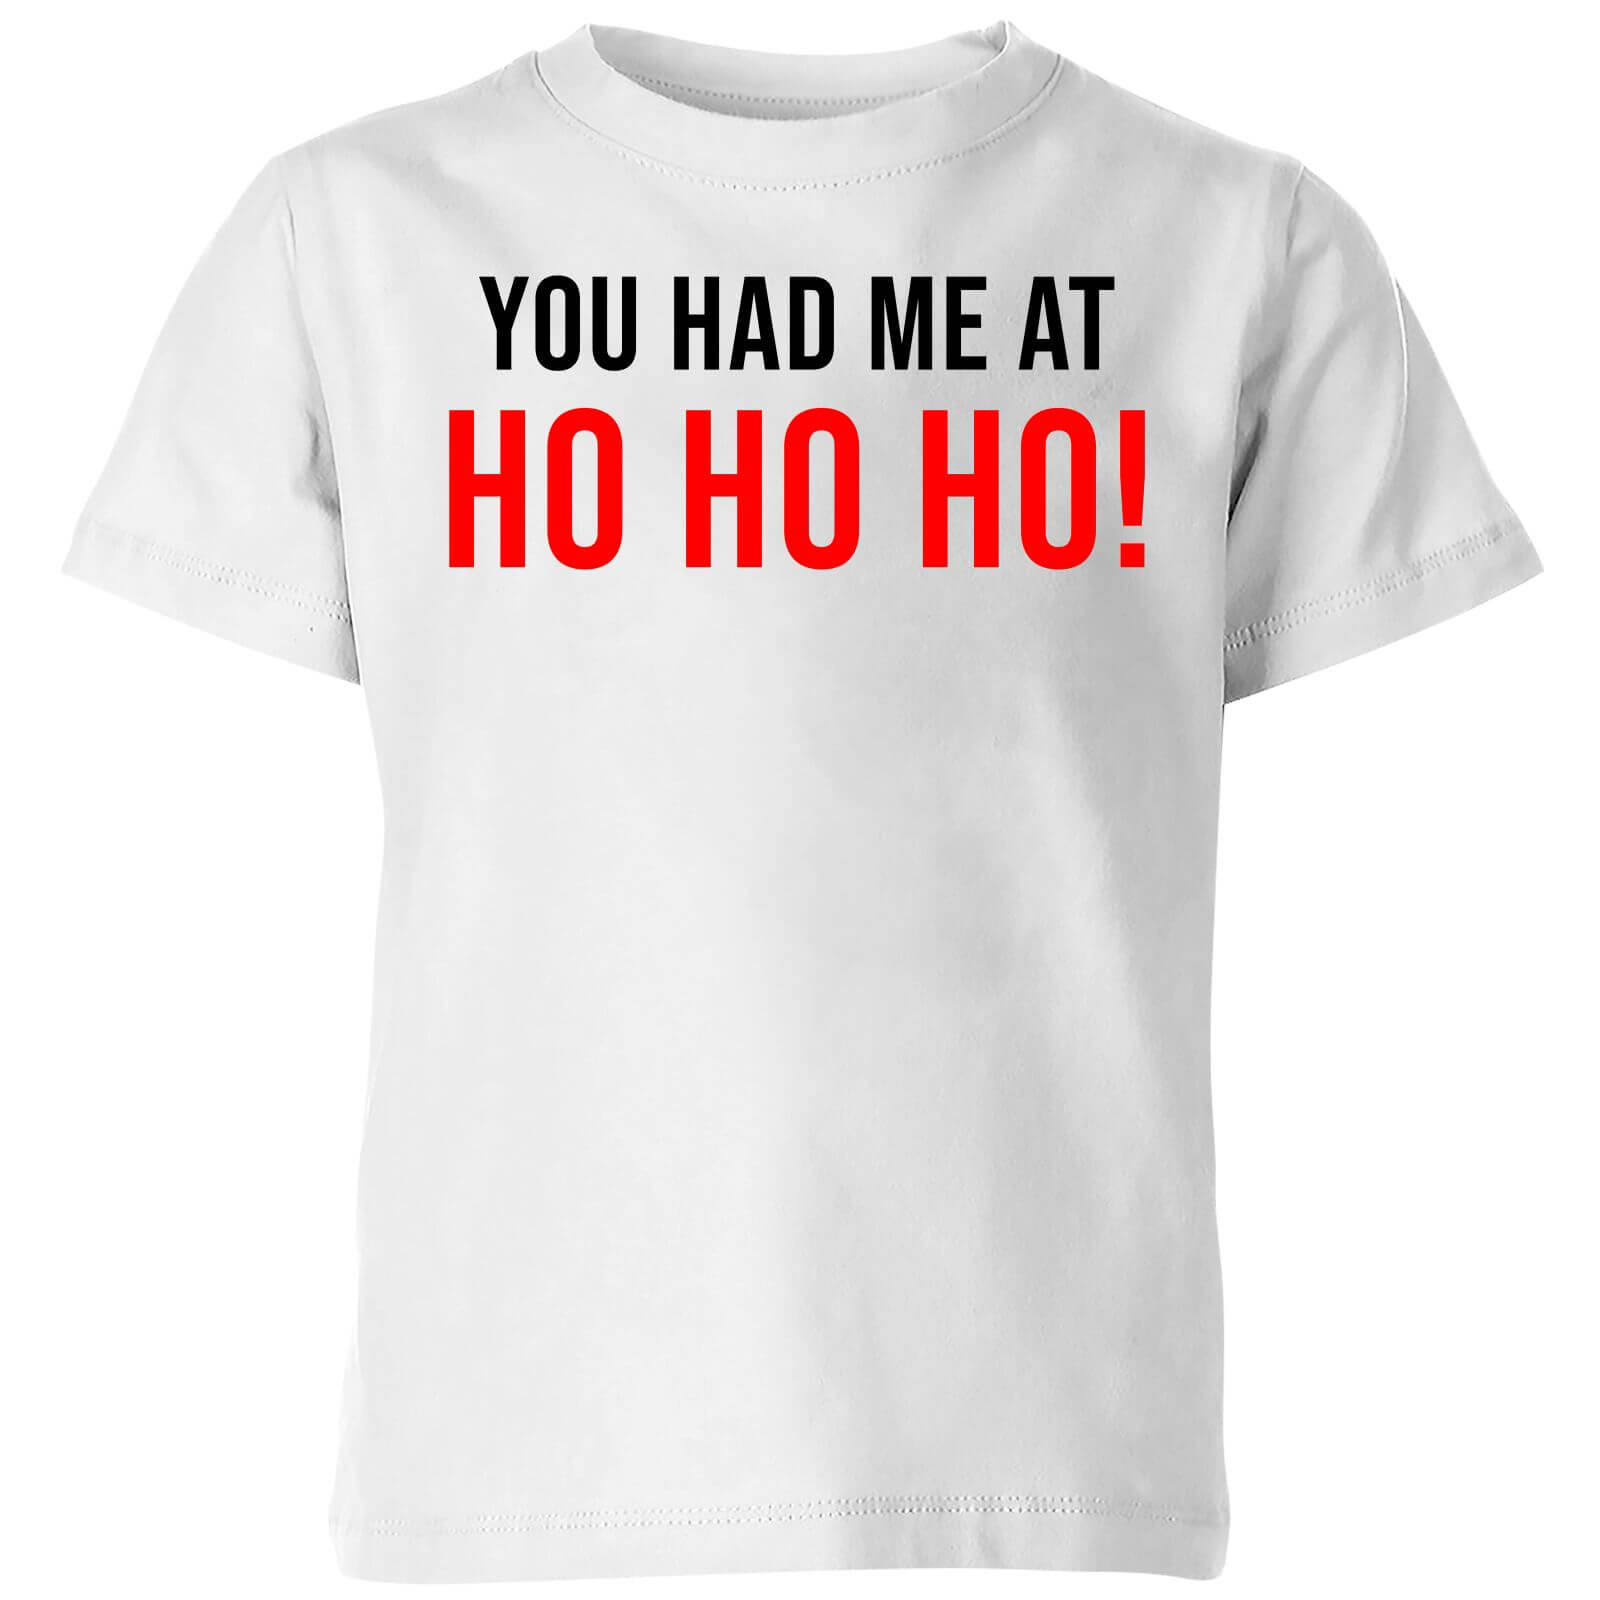 You Had Me At Ho Ho Ho! Kids' T-Shirt - White - 3-4 Years - White